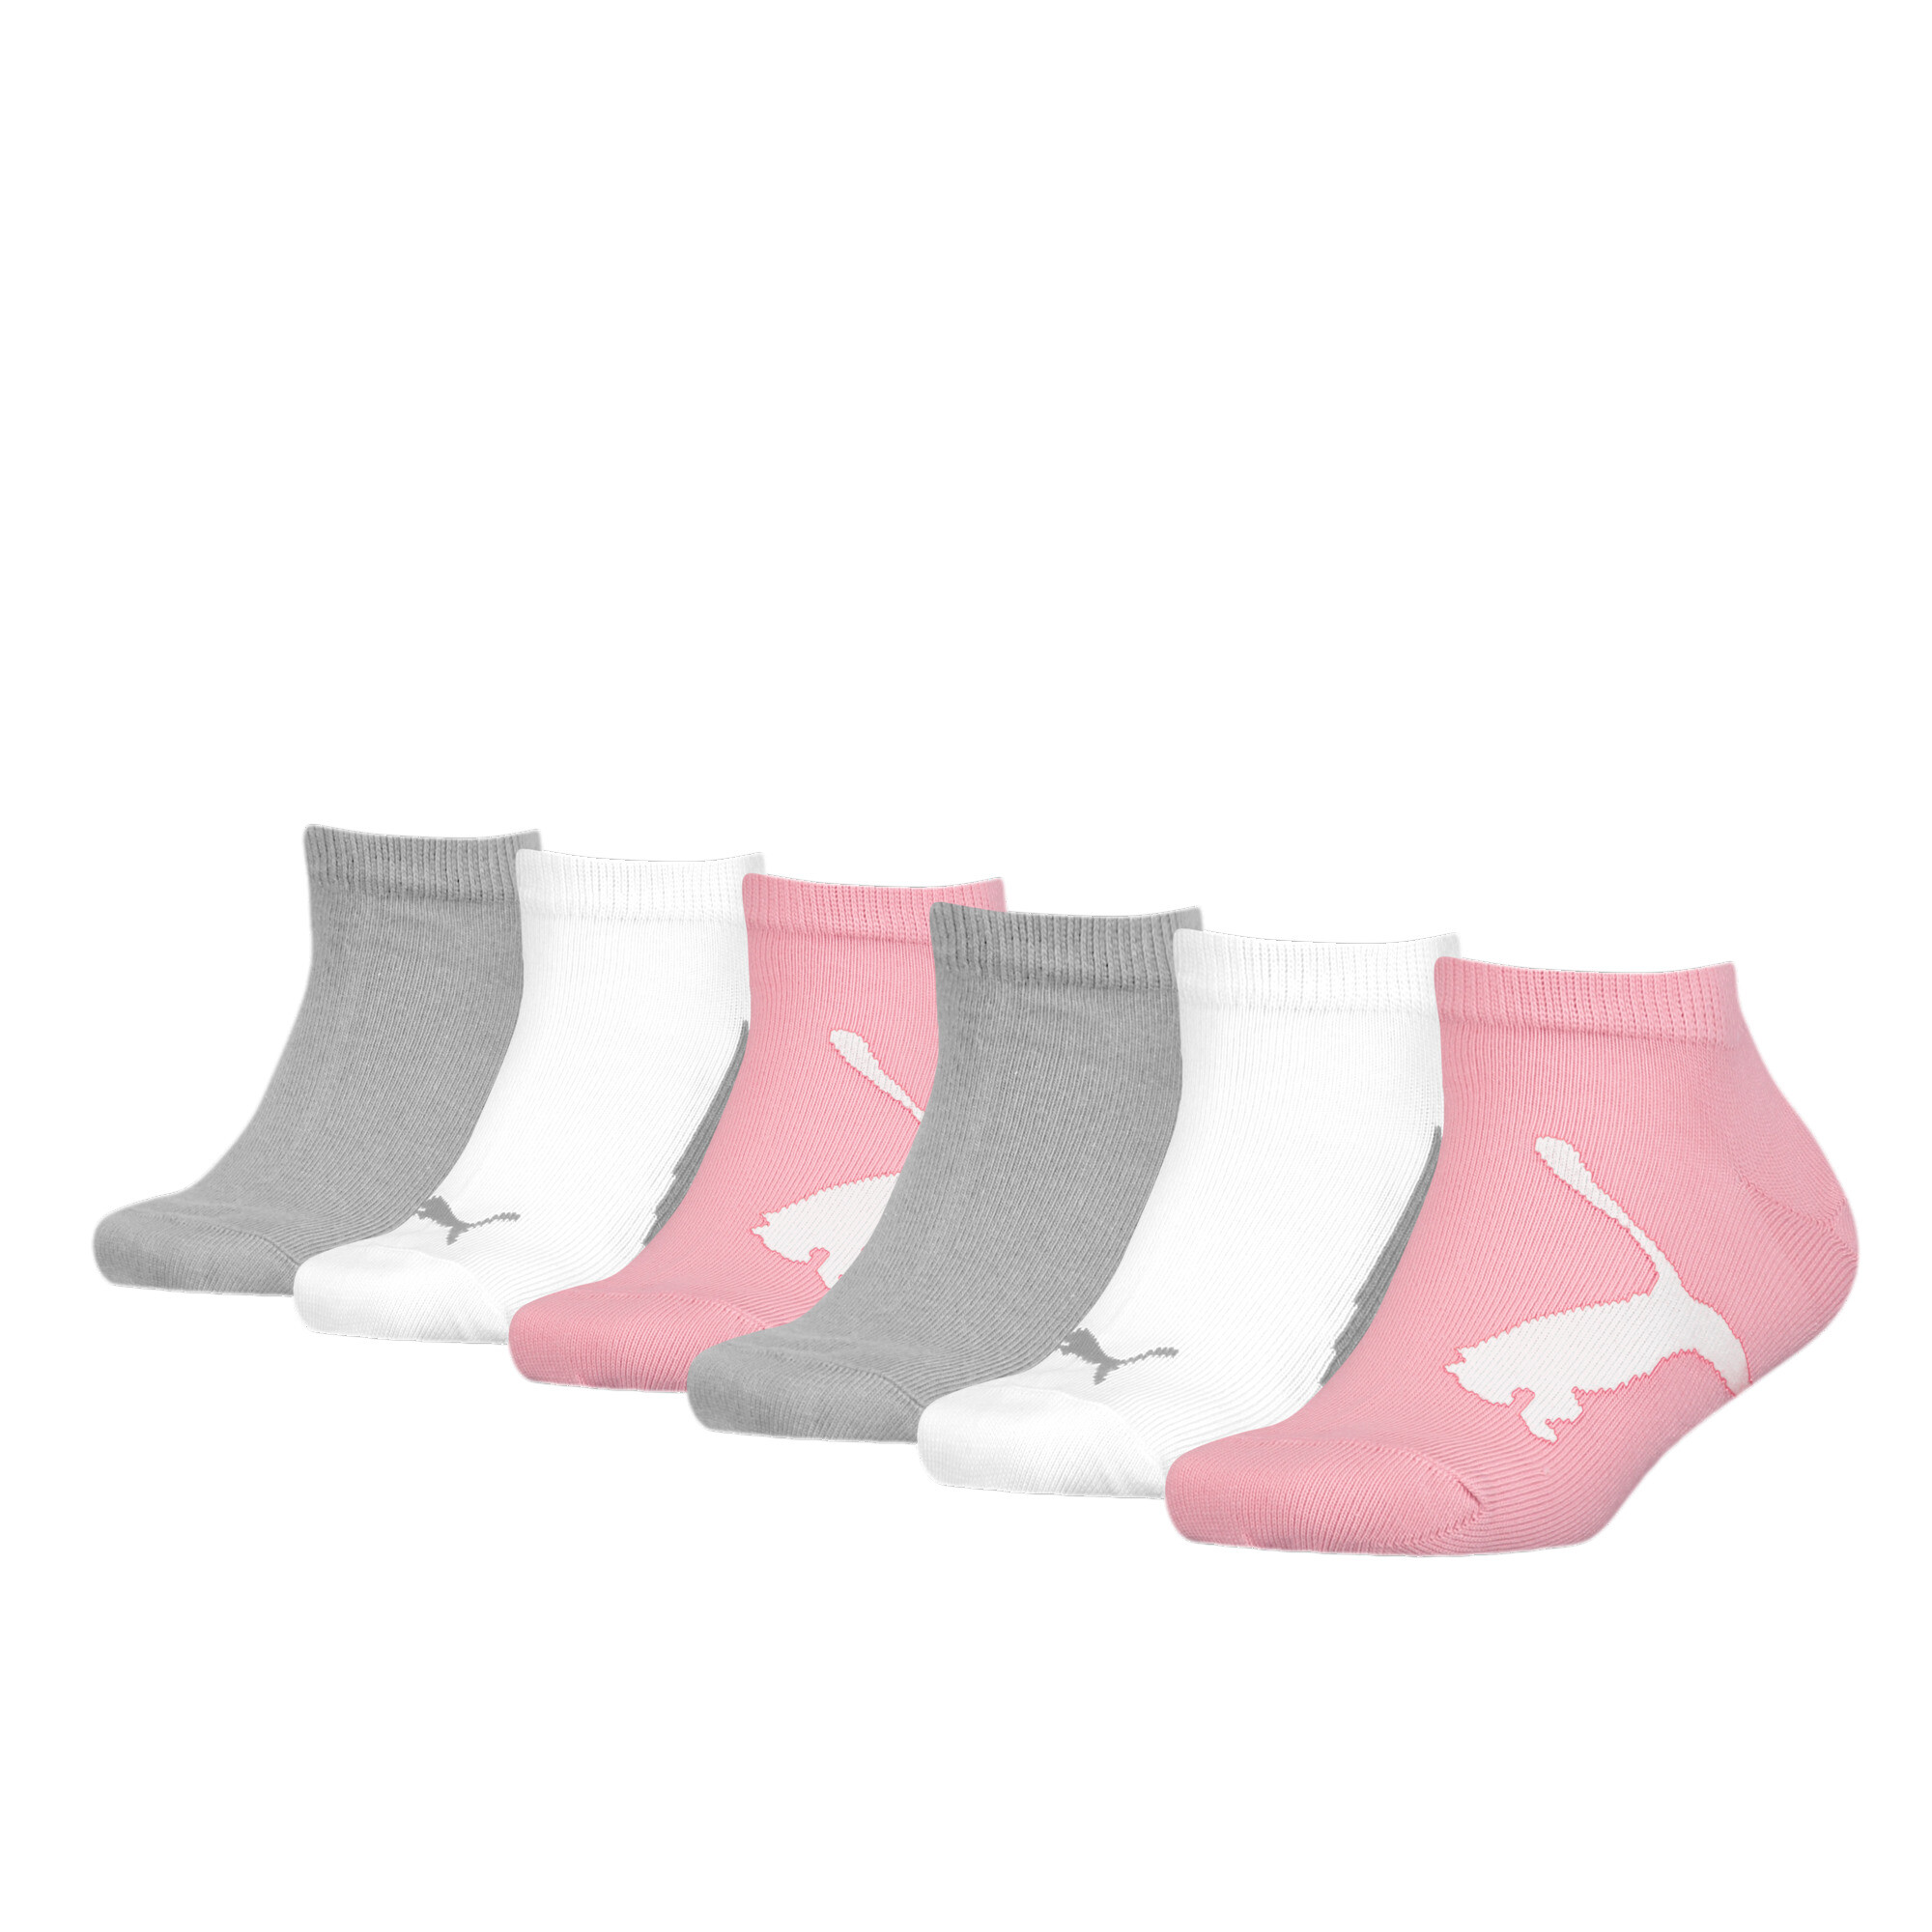 Puma Kids BWT Sneaker Socks 6 Pack, Pink, Size 35-38, Clothing